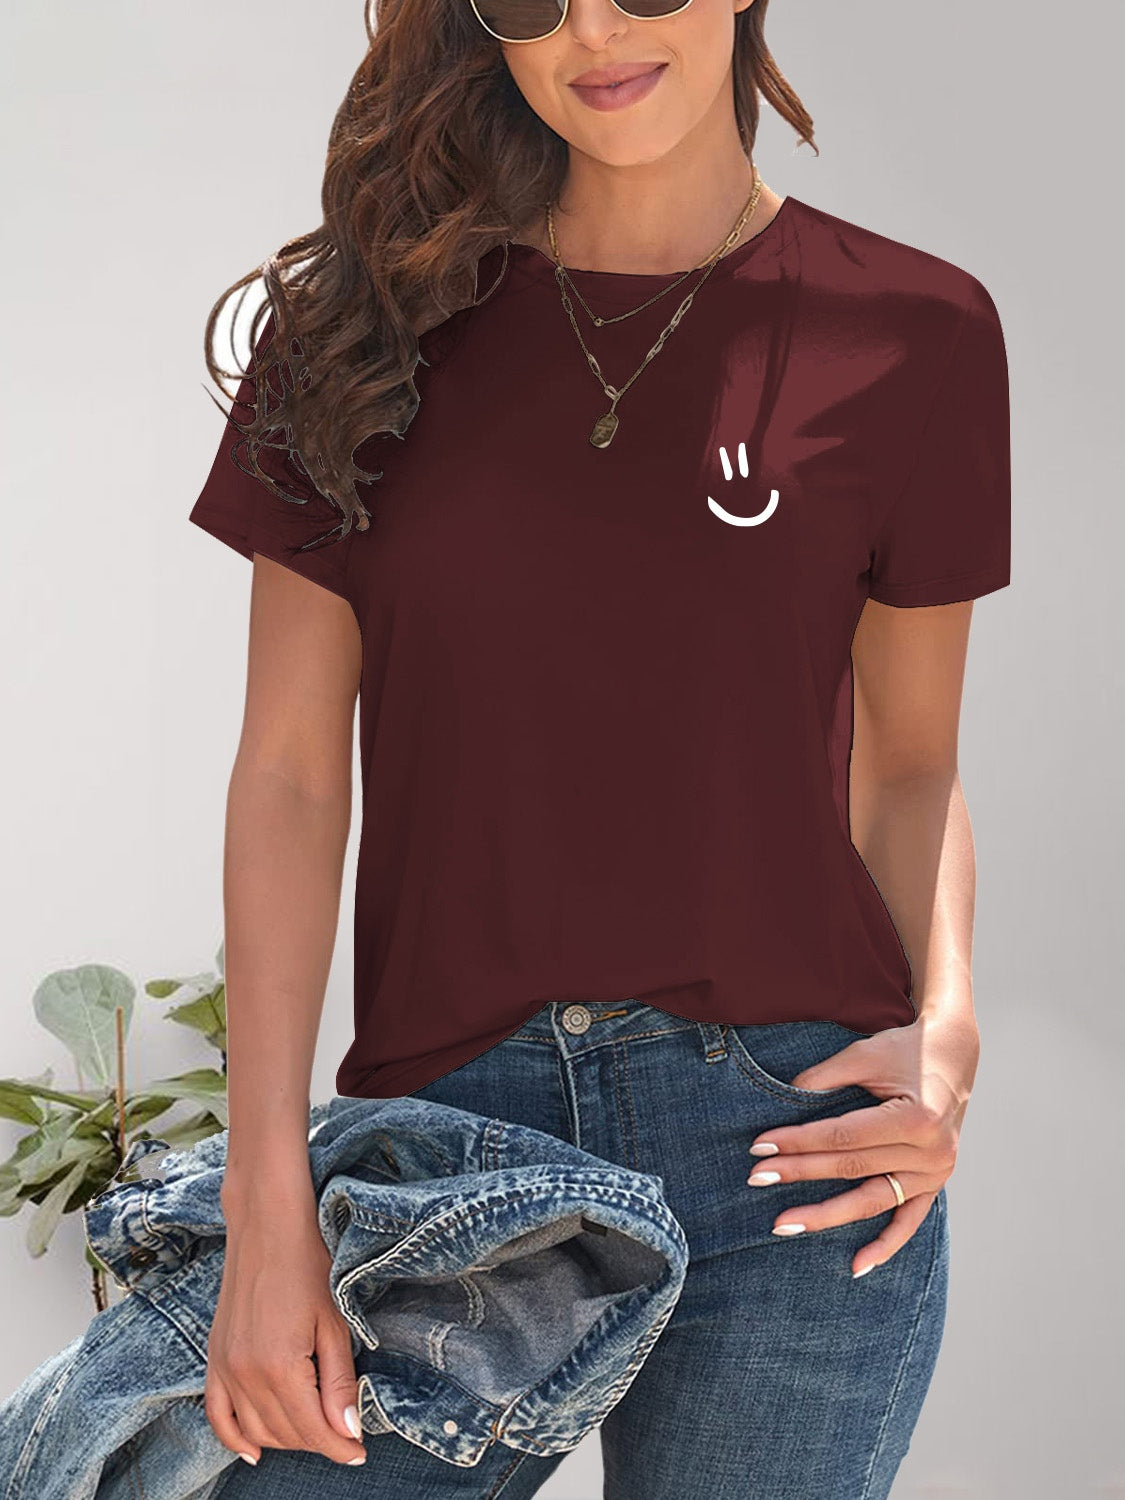 Smile Graphic Round Neck Short Sleeve T-Shirt Wine S 